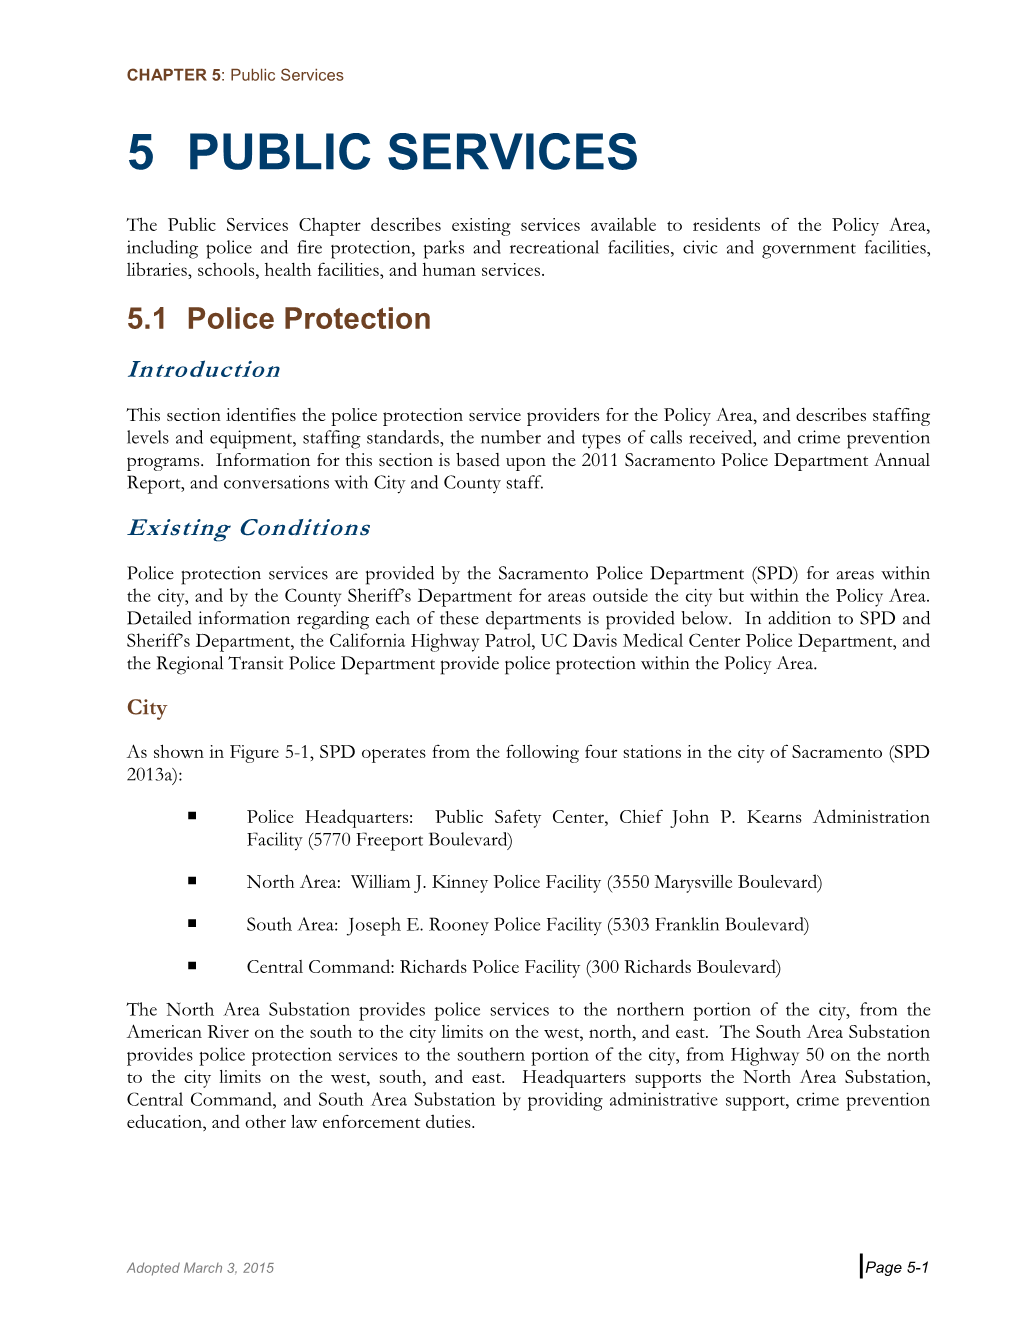 CHAPTER 5: Public Services PS-5